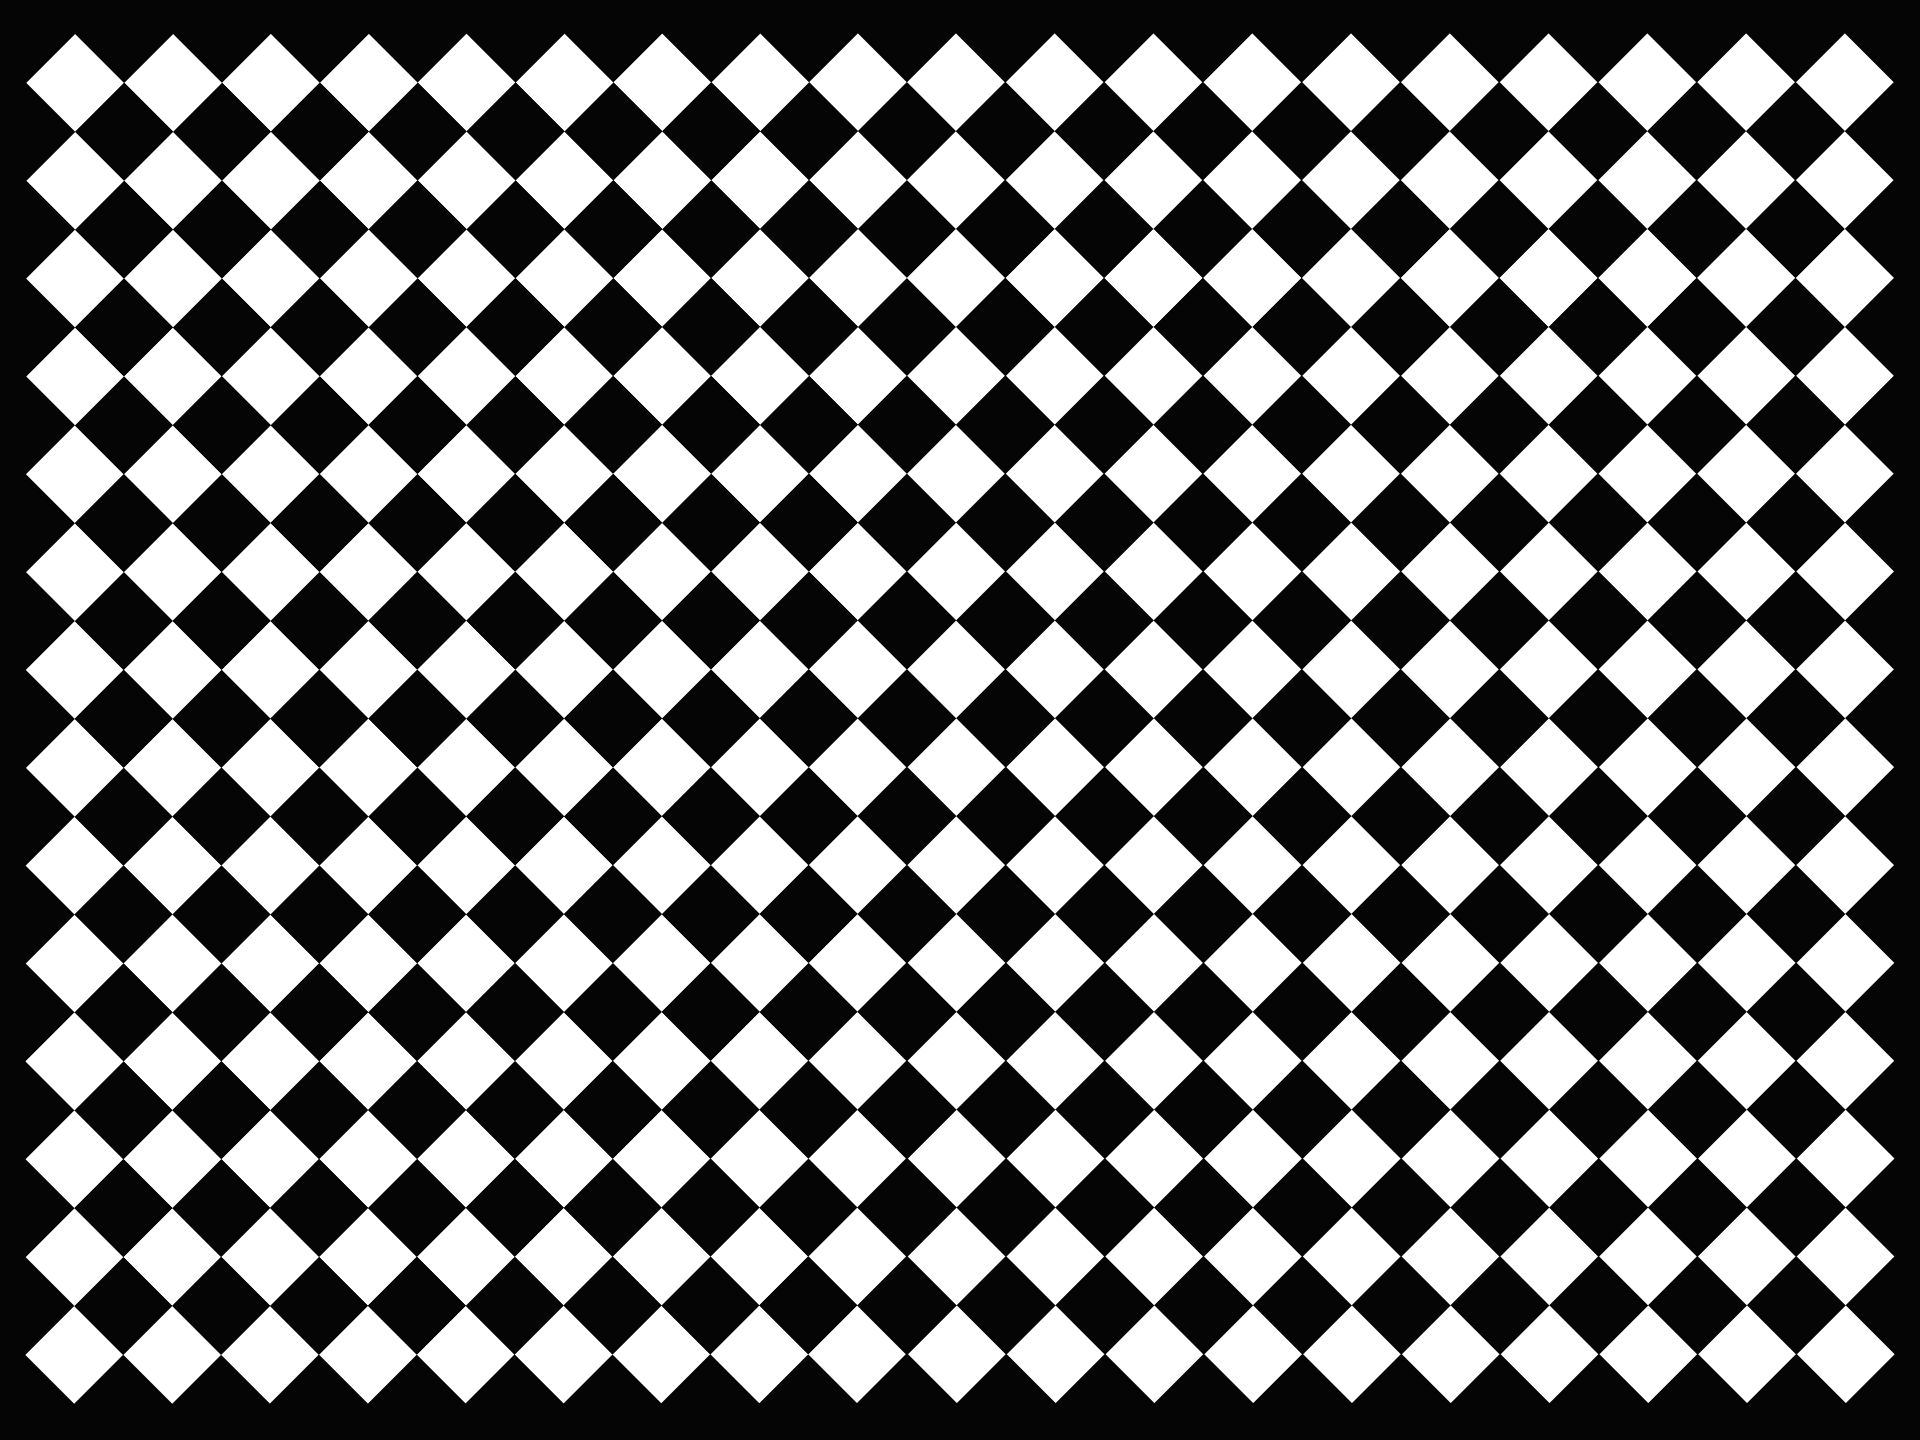 printable-checkerboard-pattern-printable-world-holiday